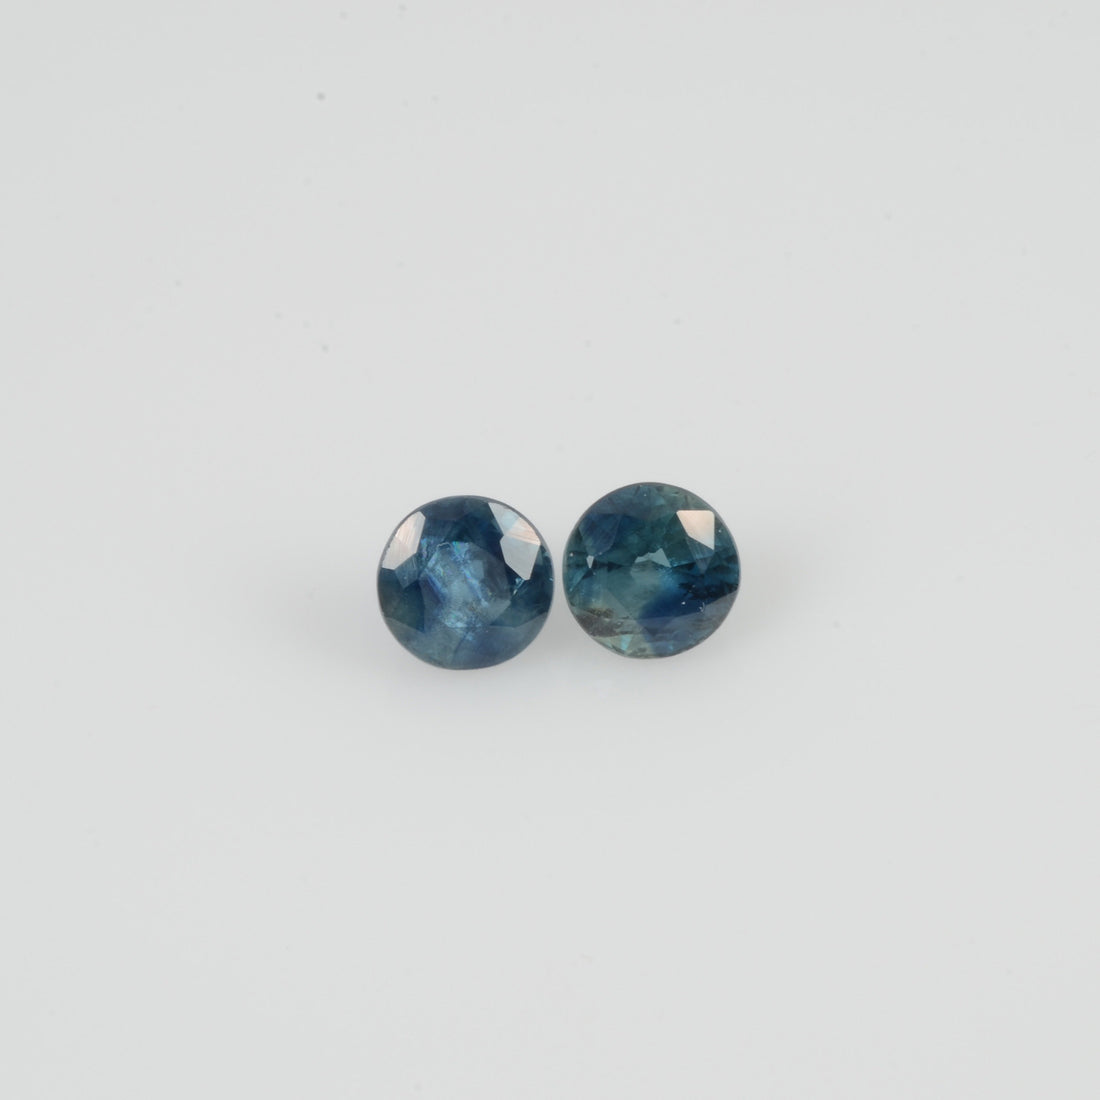 3.7-4.5 mm Lot Natural Blue Sapphire Loose Gemstone Round Cut - Thai Gems Export Ltd.